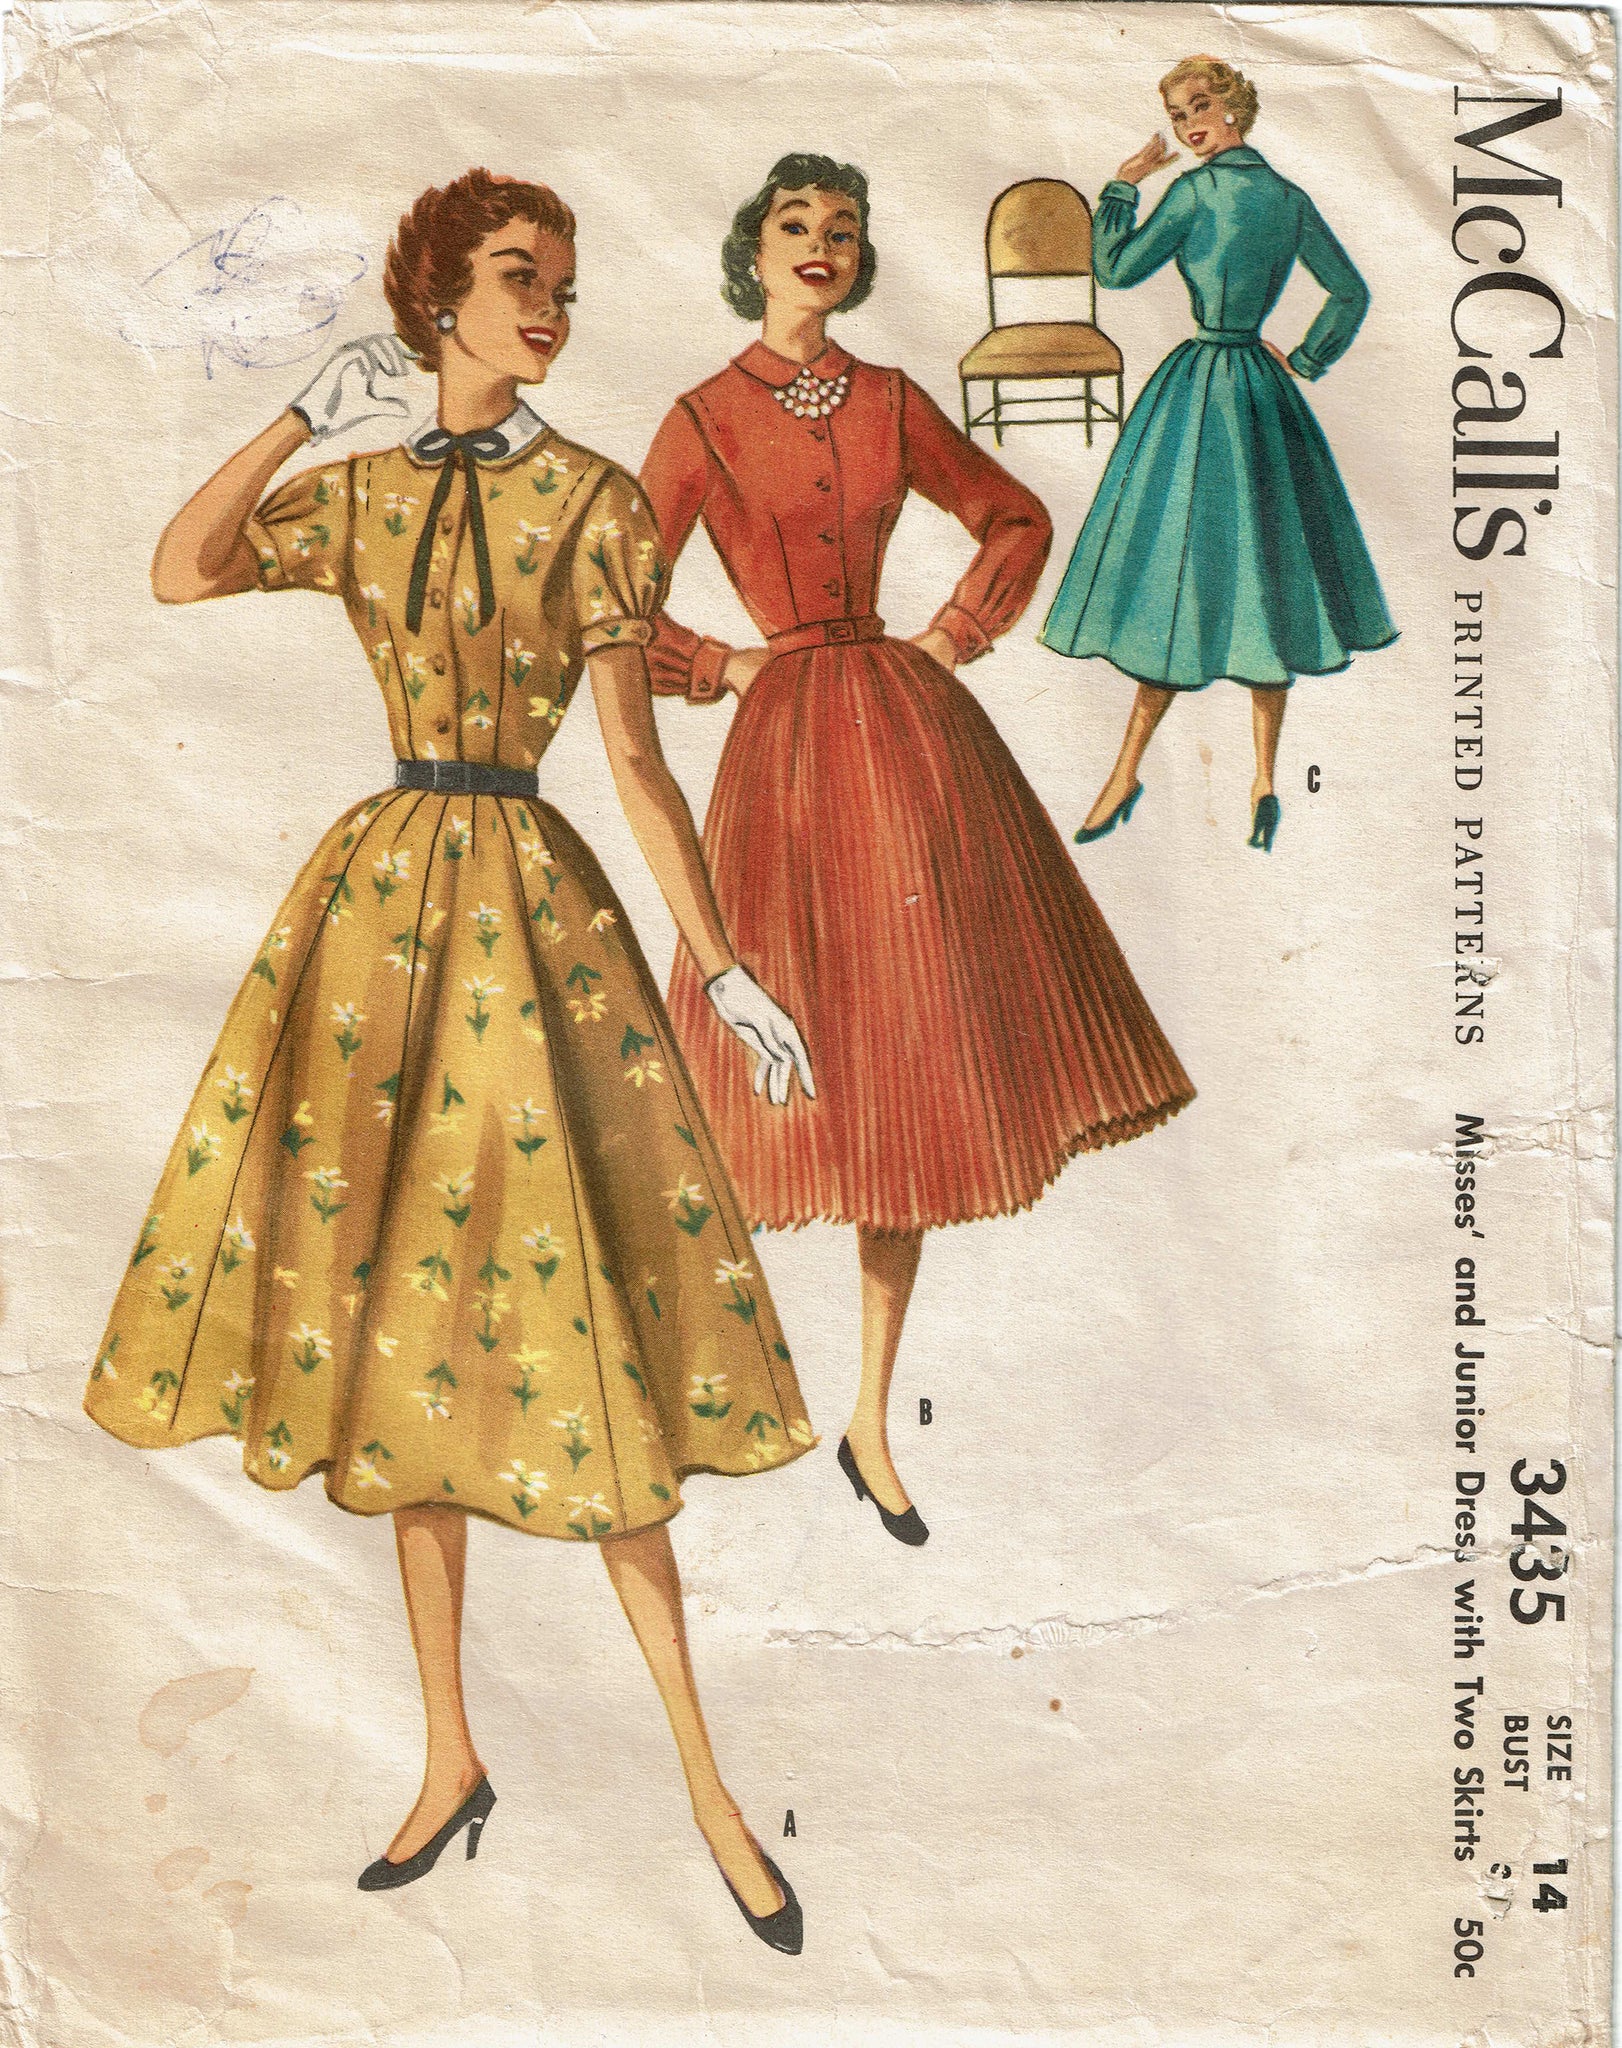 1950s Mccall's 4016 UNCUT Vintage Sewing Pattern Girl's Shirtwaist Dress,  Full Skirt Dress Size 4, Size 6 -  Canada